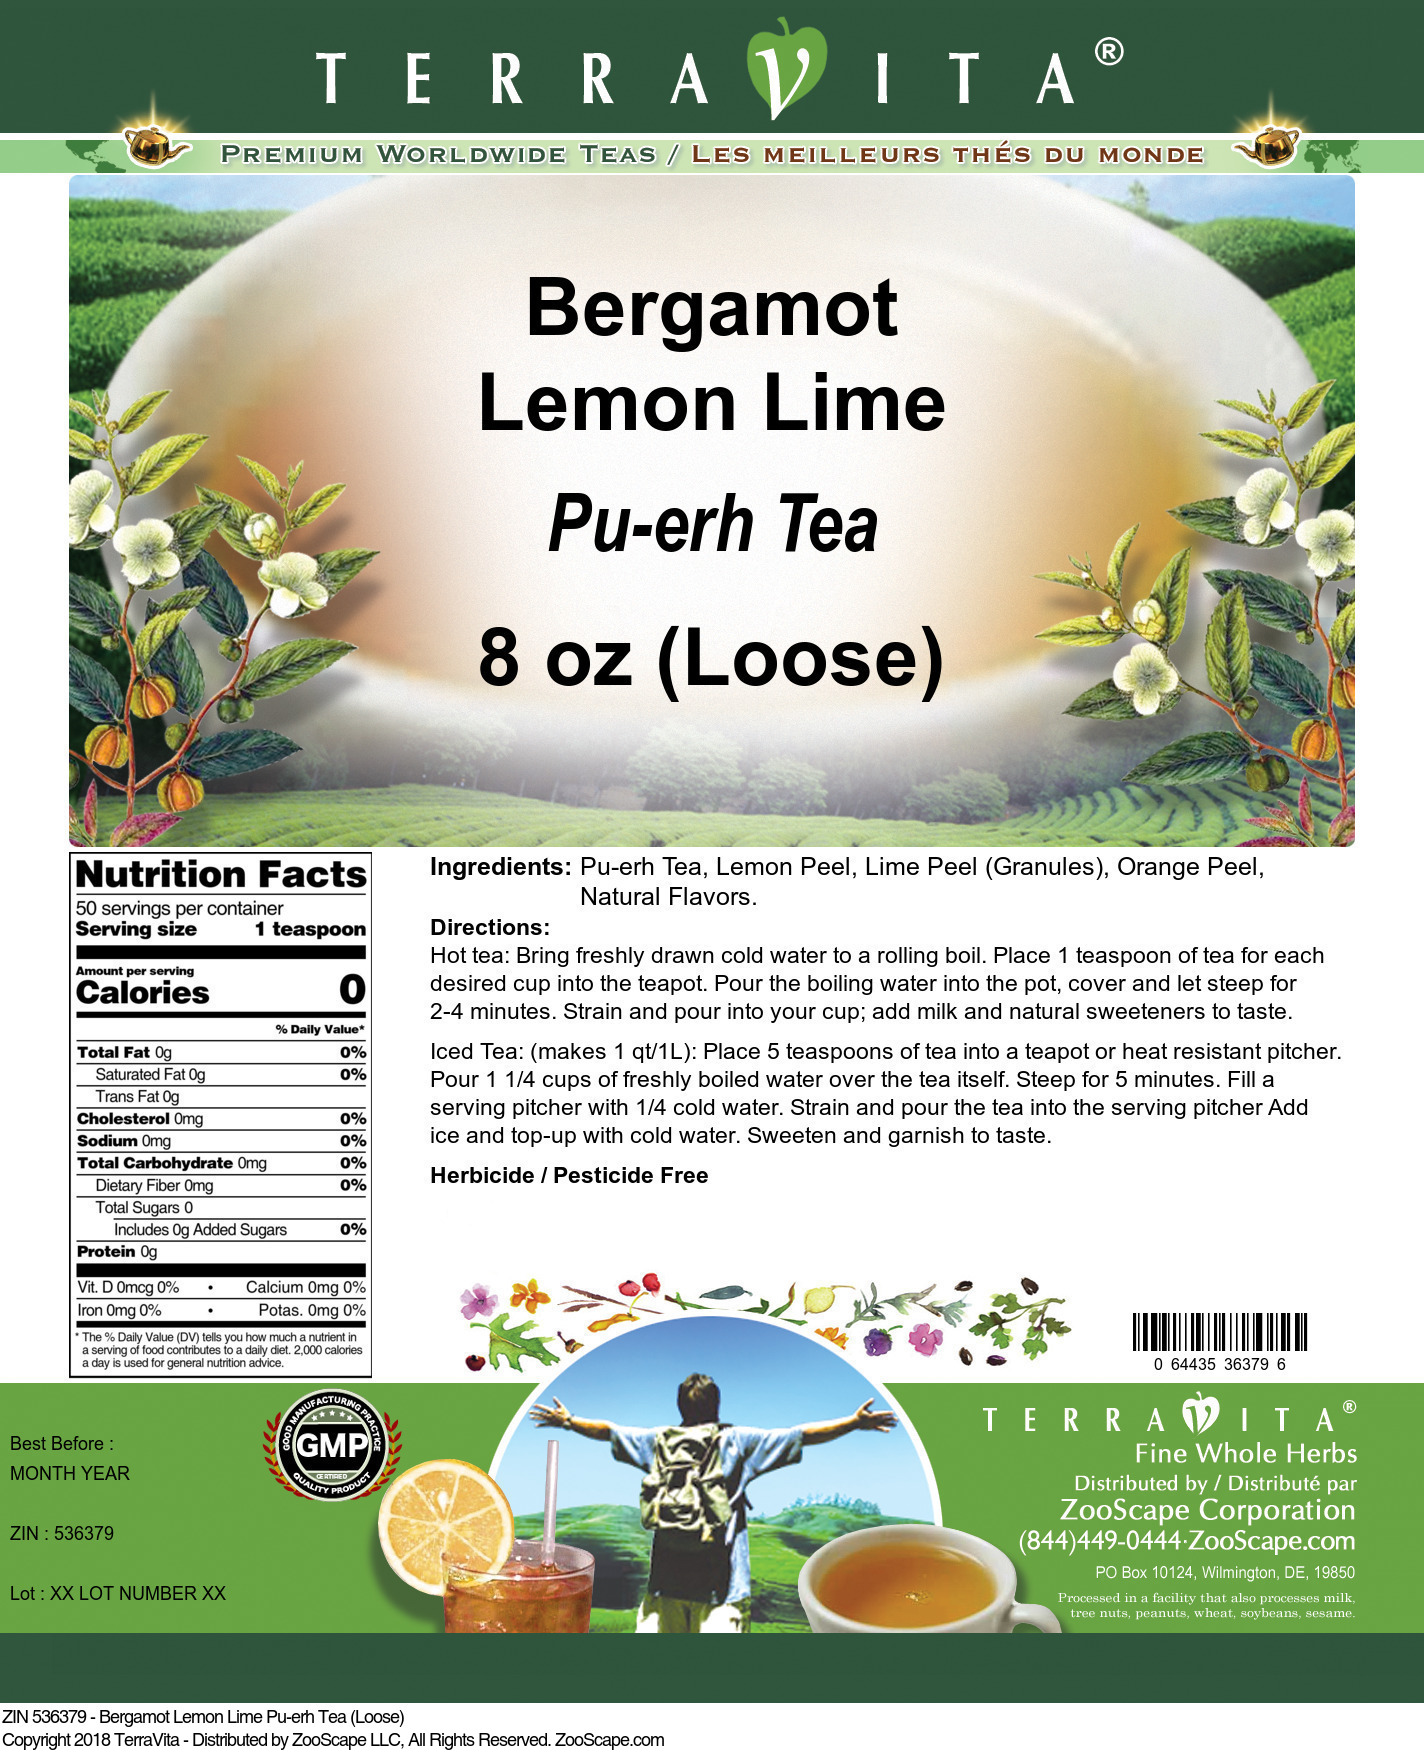 Bergamot Lemon Lime Pu-erh Tea (Loose) - Label